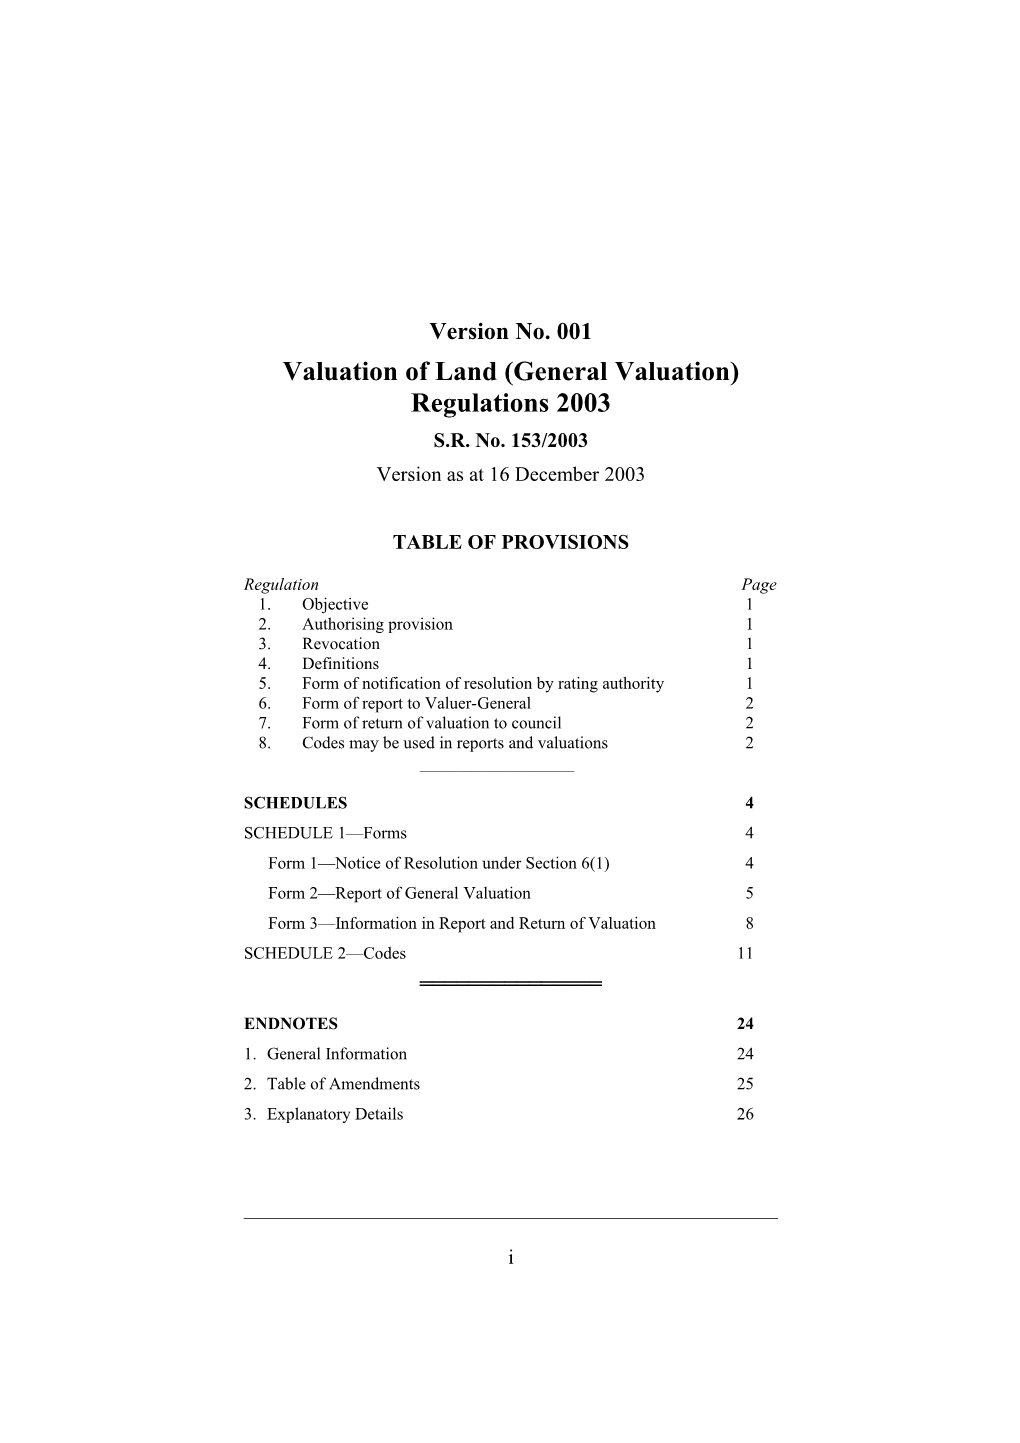 Valuation of Land (General Valuation) Regulations 2003